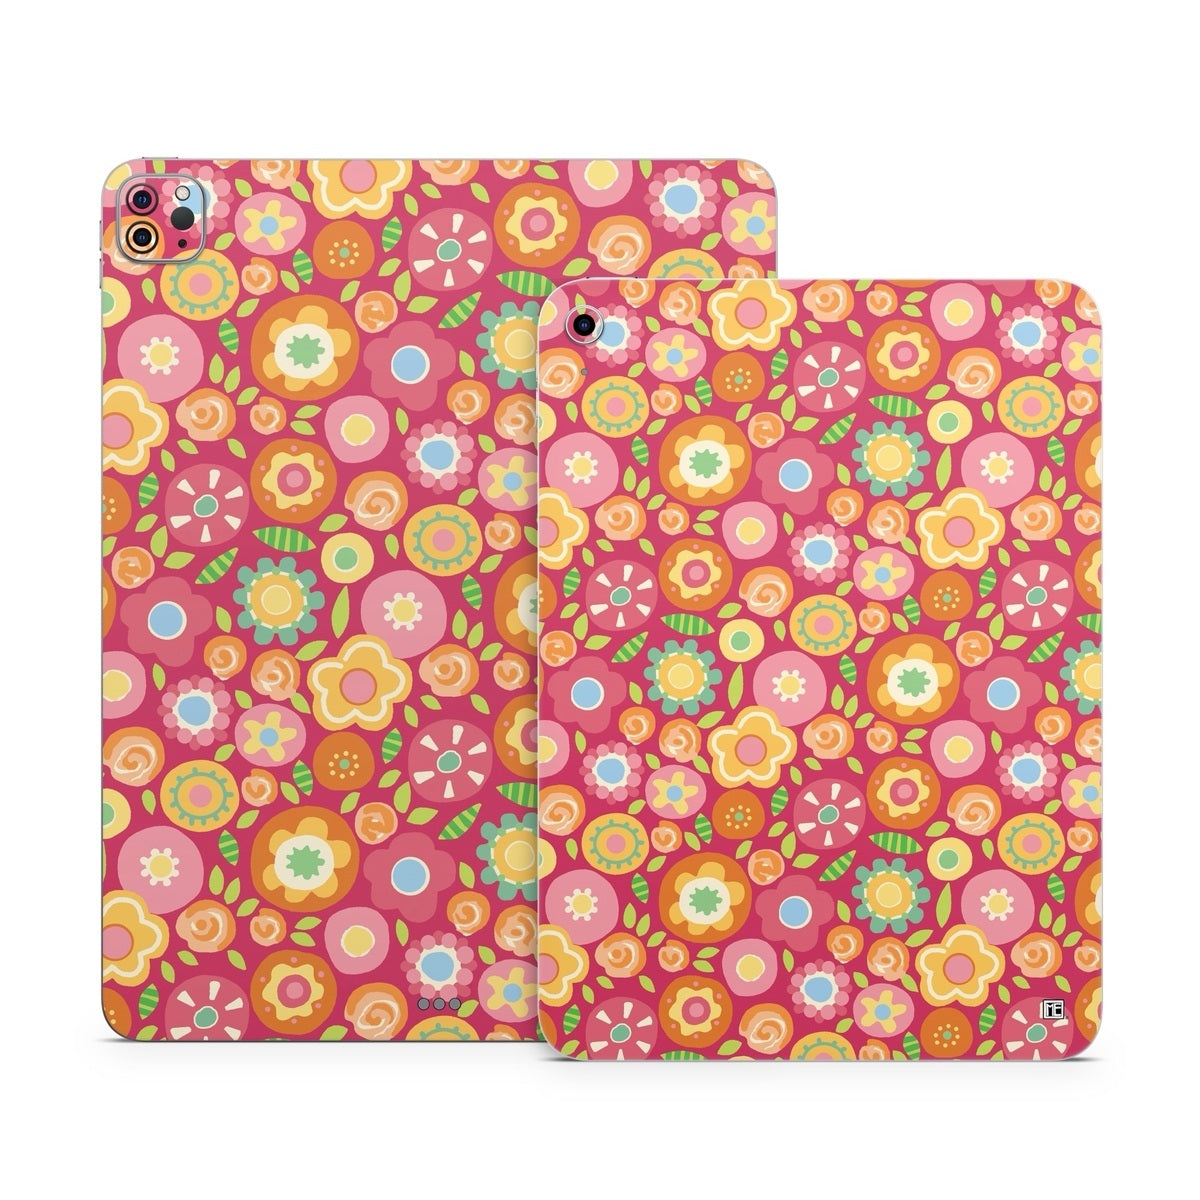 Flowers Squished - Apple iPad Skin